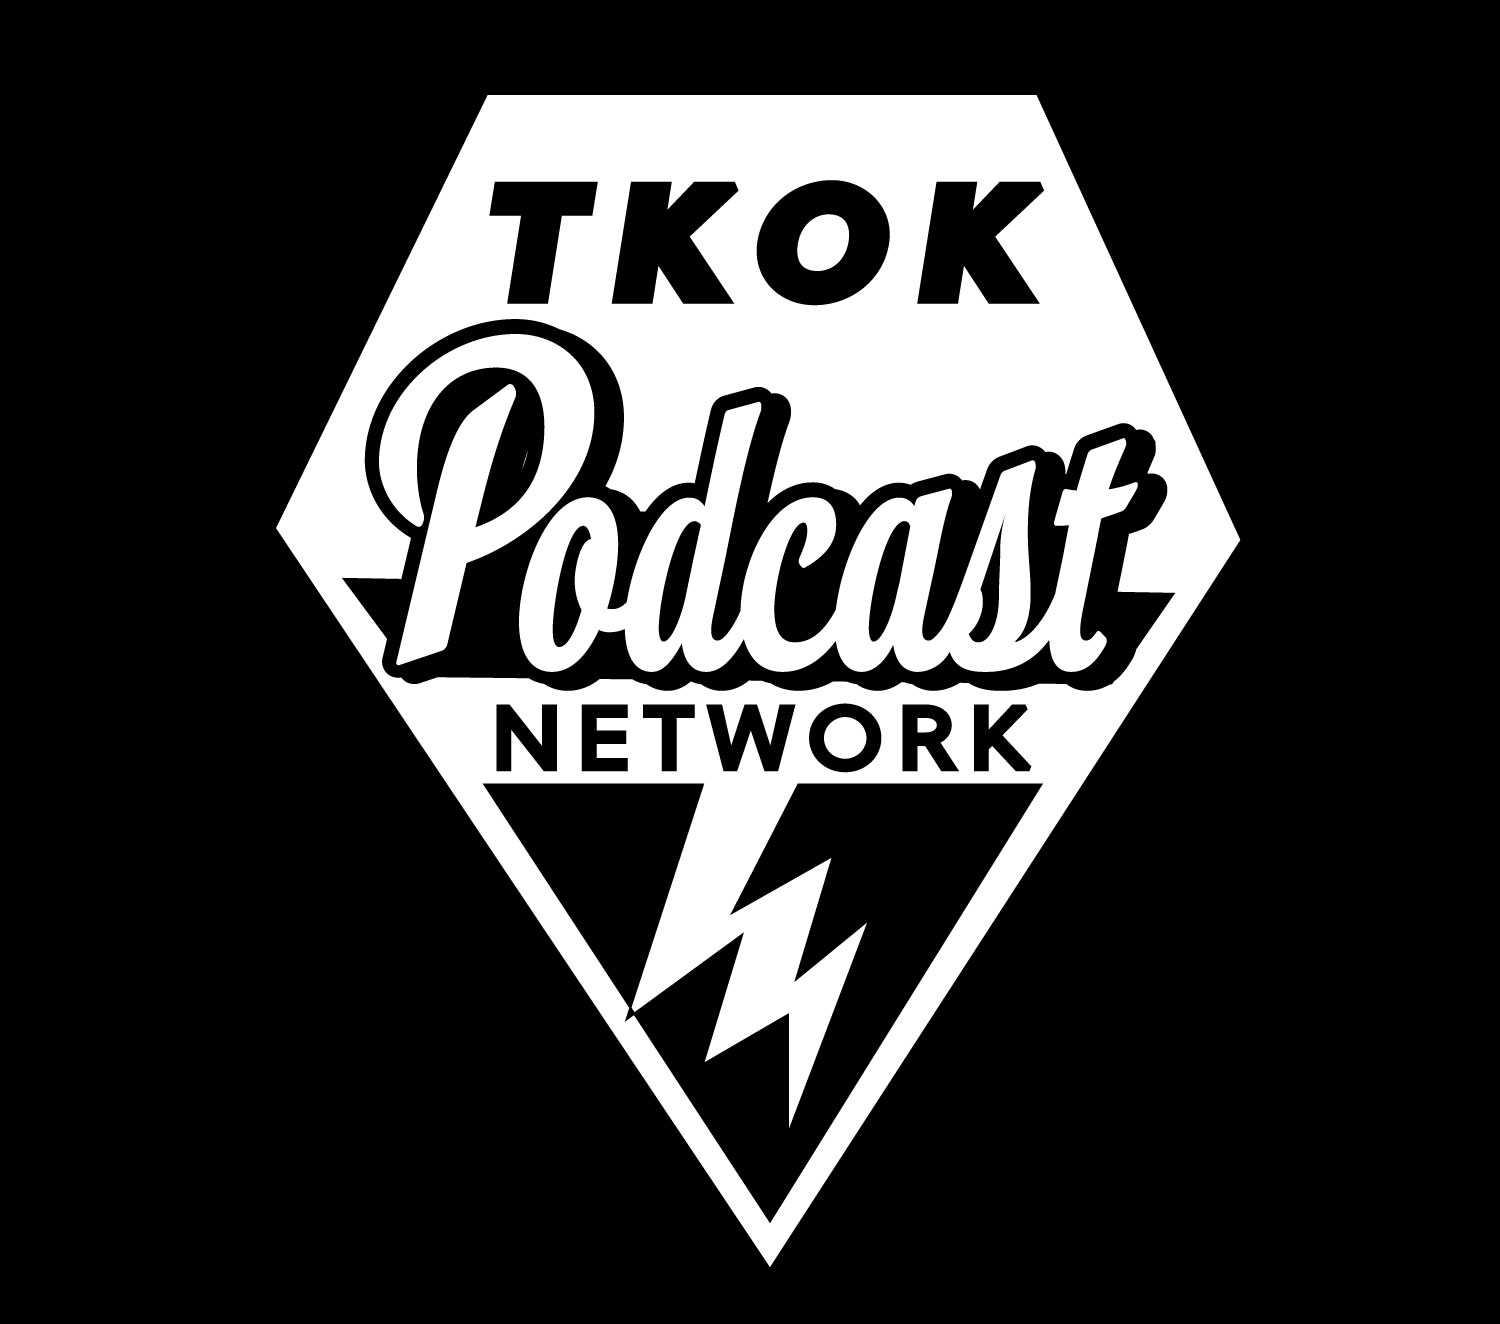 TKOK Podcast Network Announcement